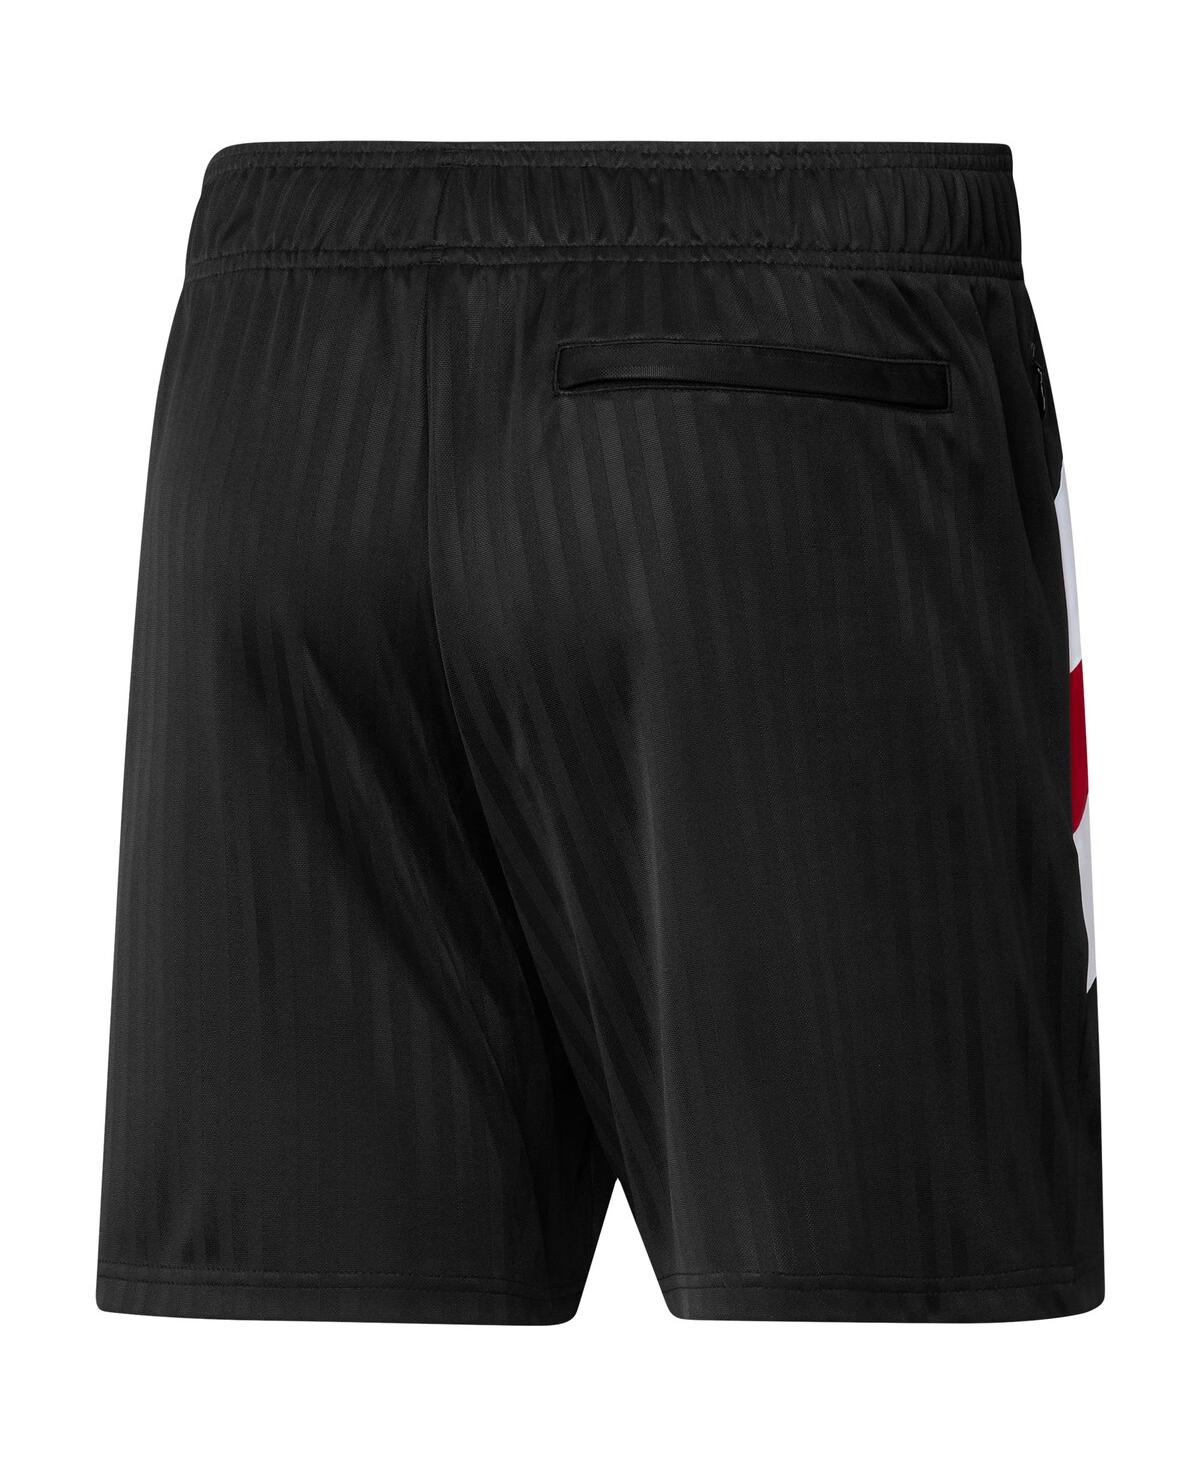 Shop Adidas Originals Men's Adidas Black Manchester United Football Icon Shorts